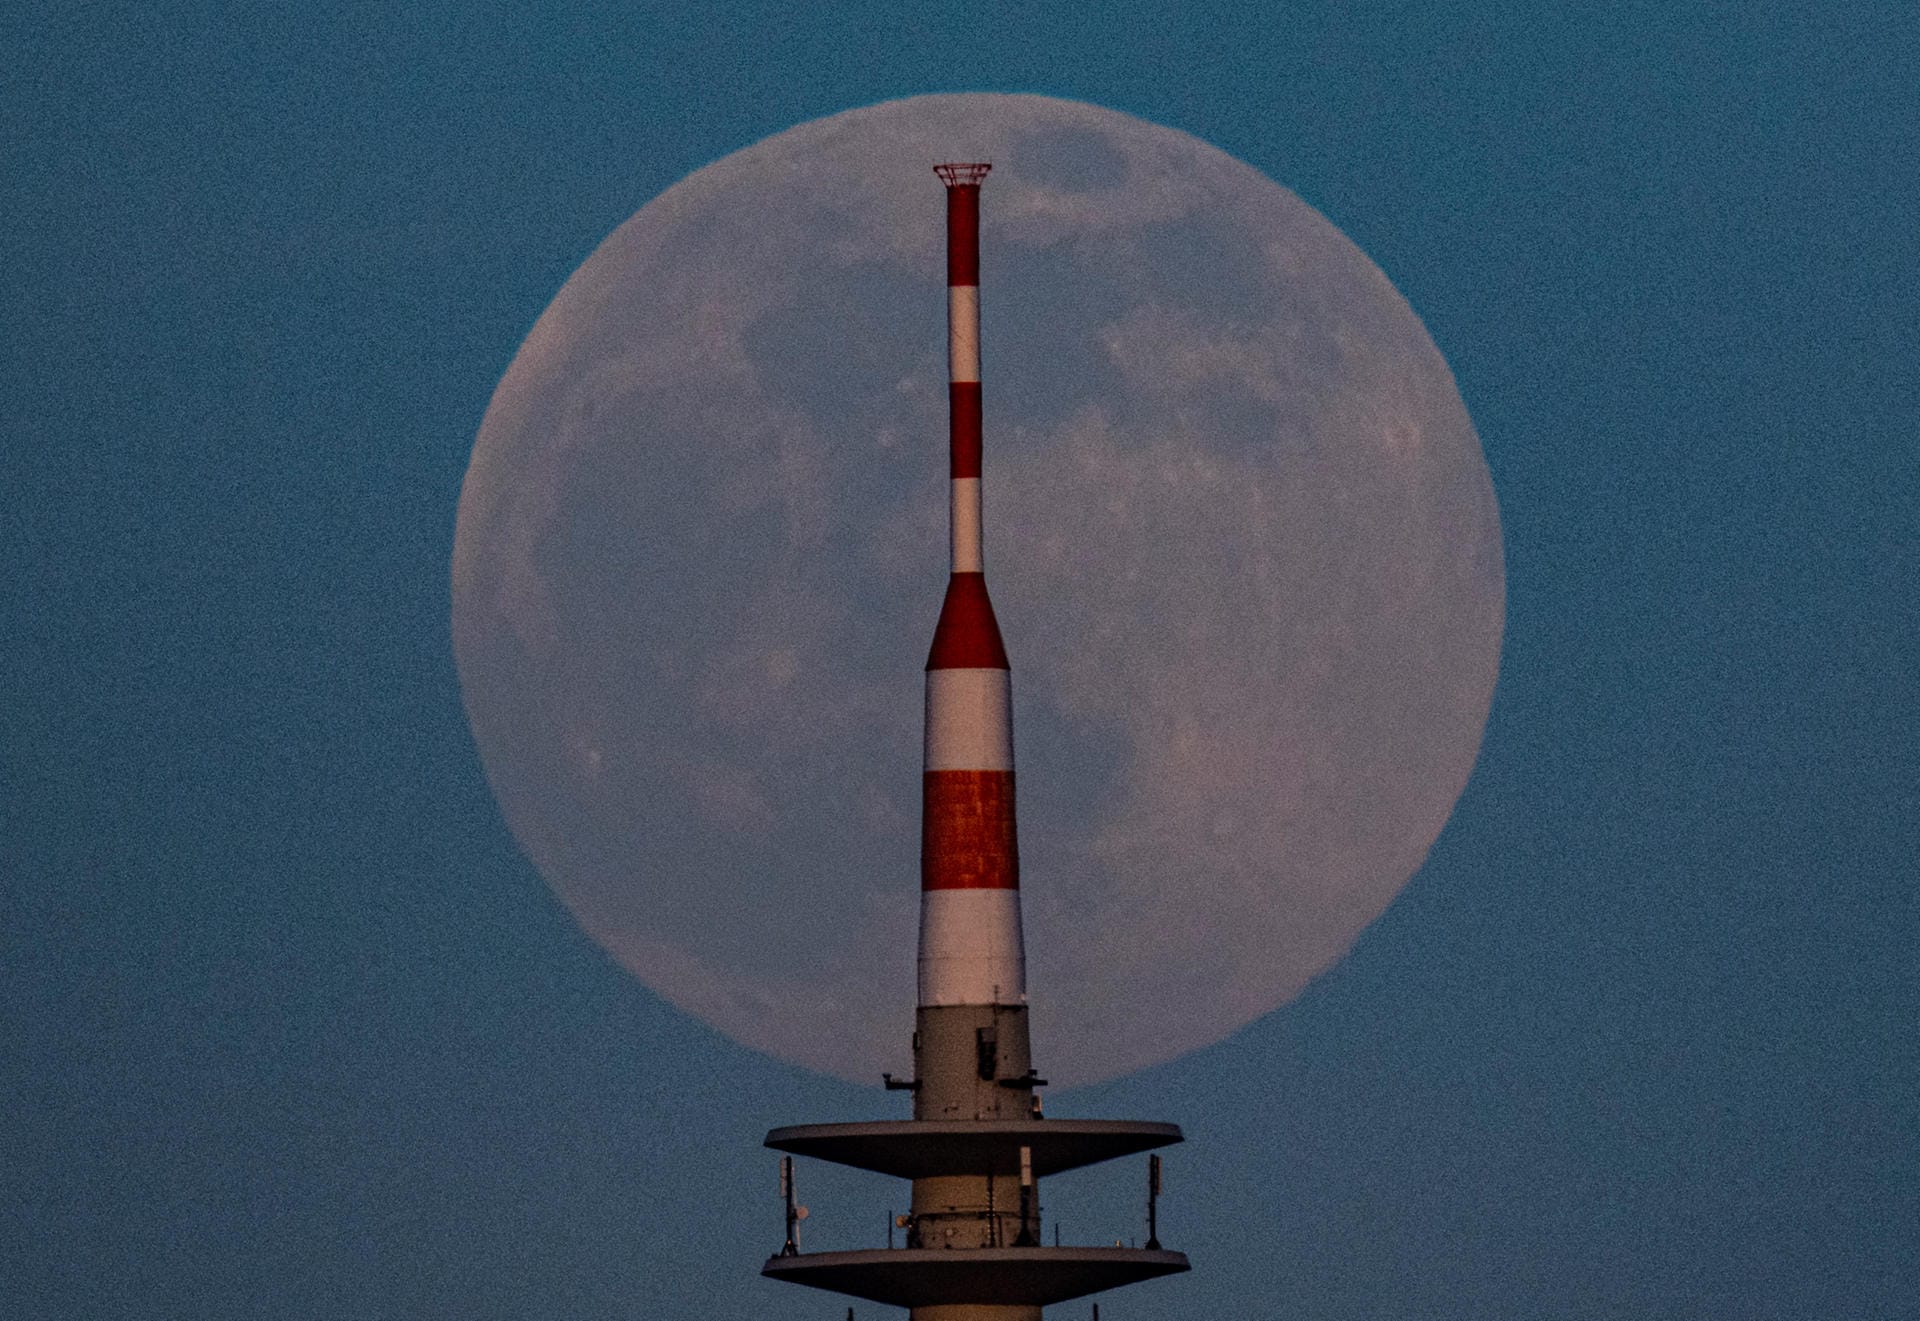 Hessen, Frankfurt am Main: Der Mond geht hinter dem Fernsehturm auf.